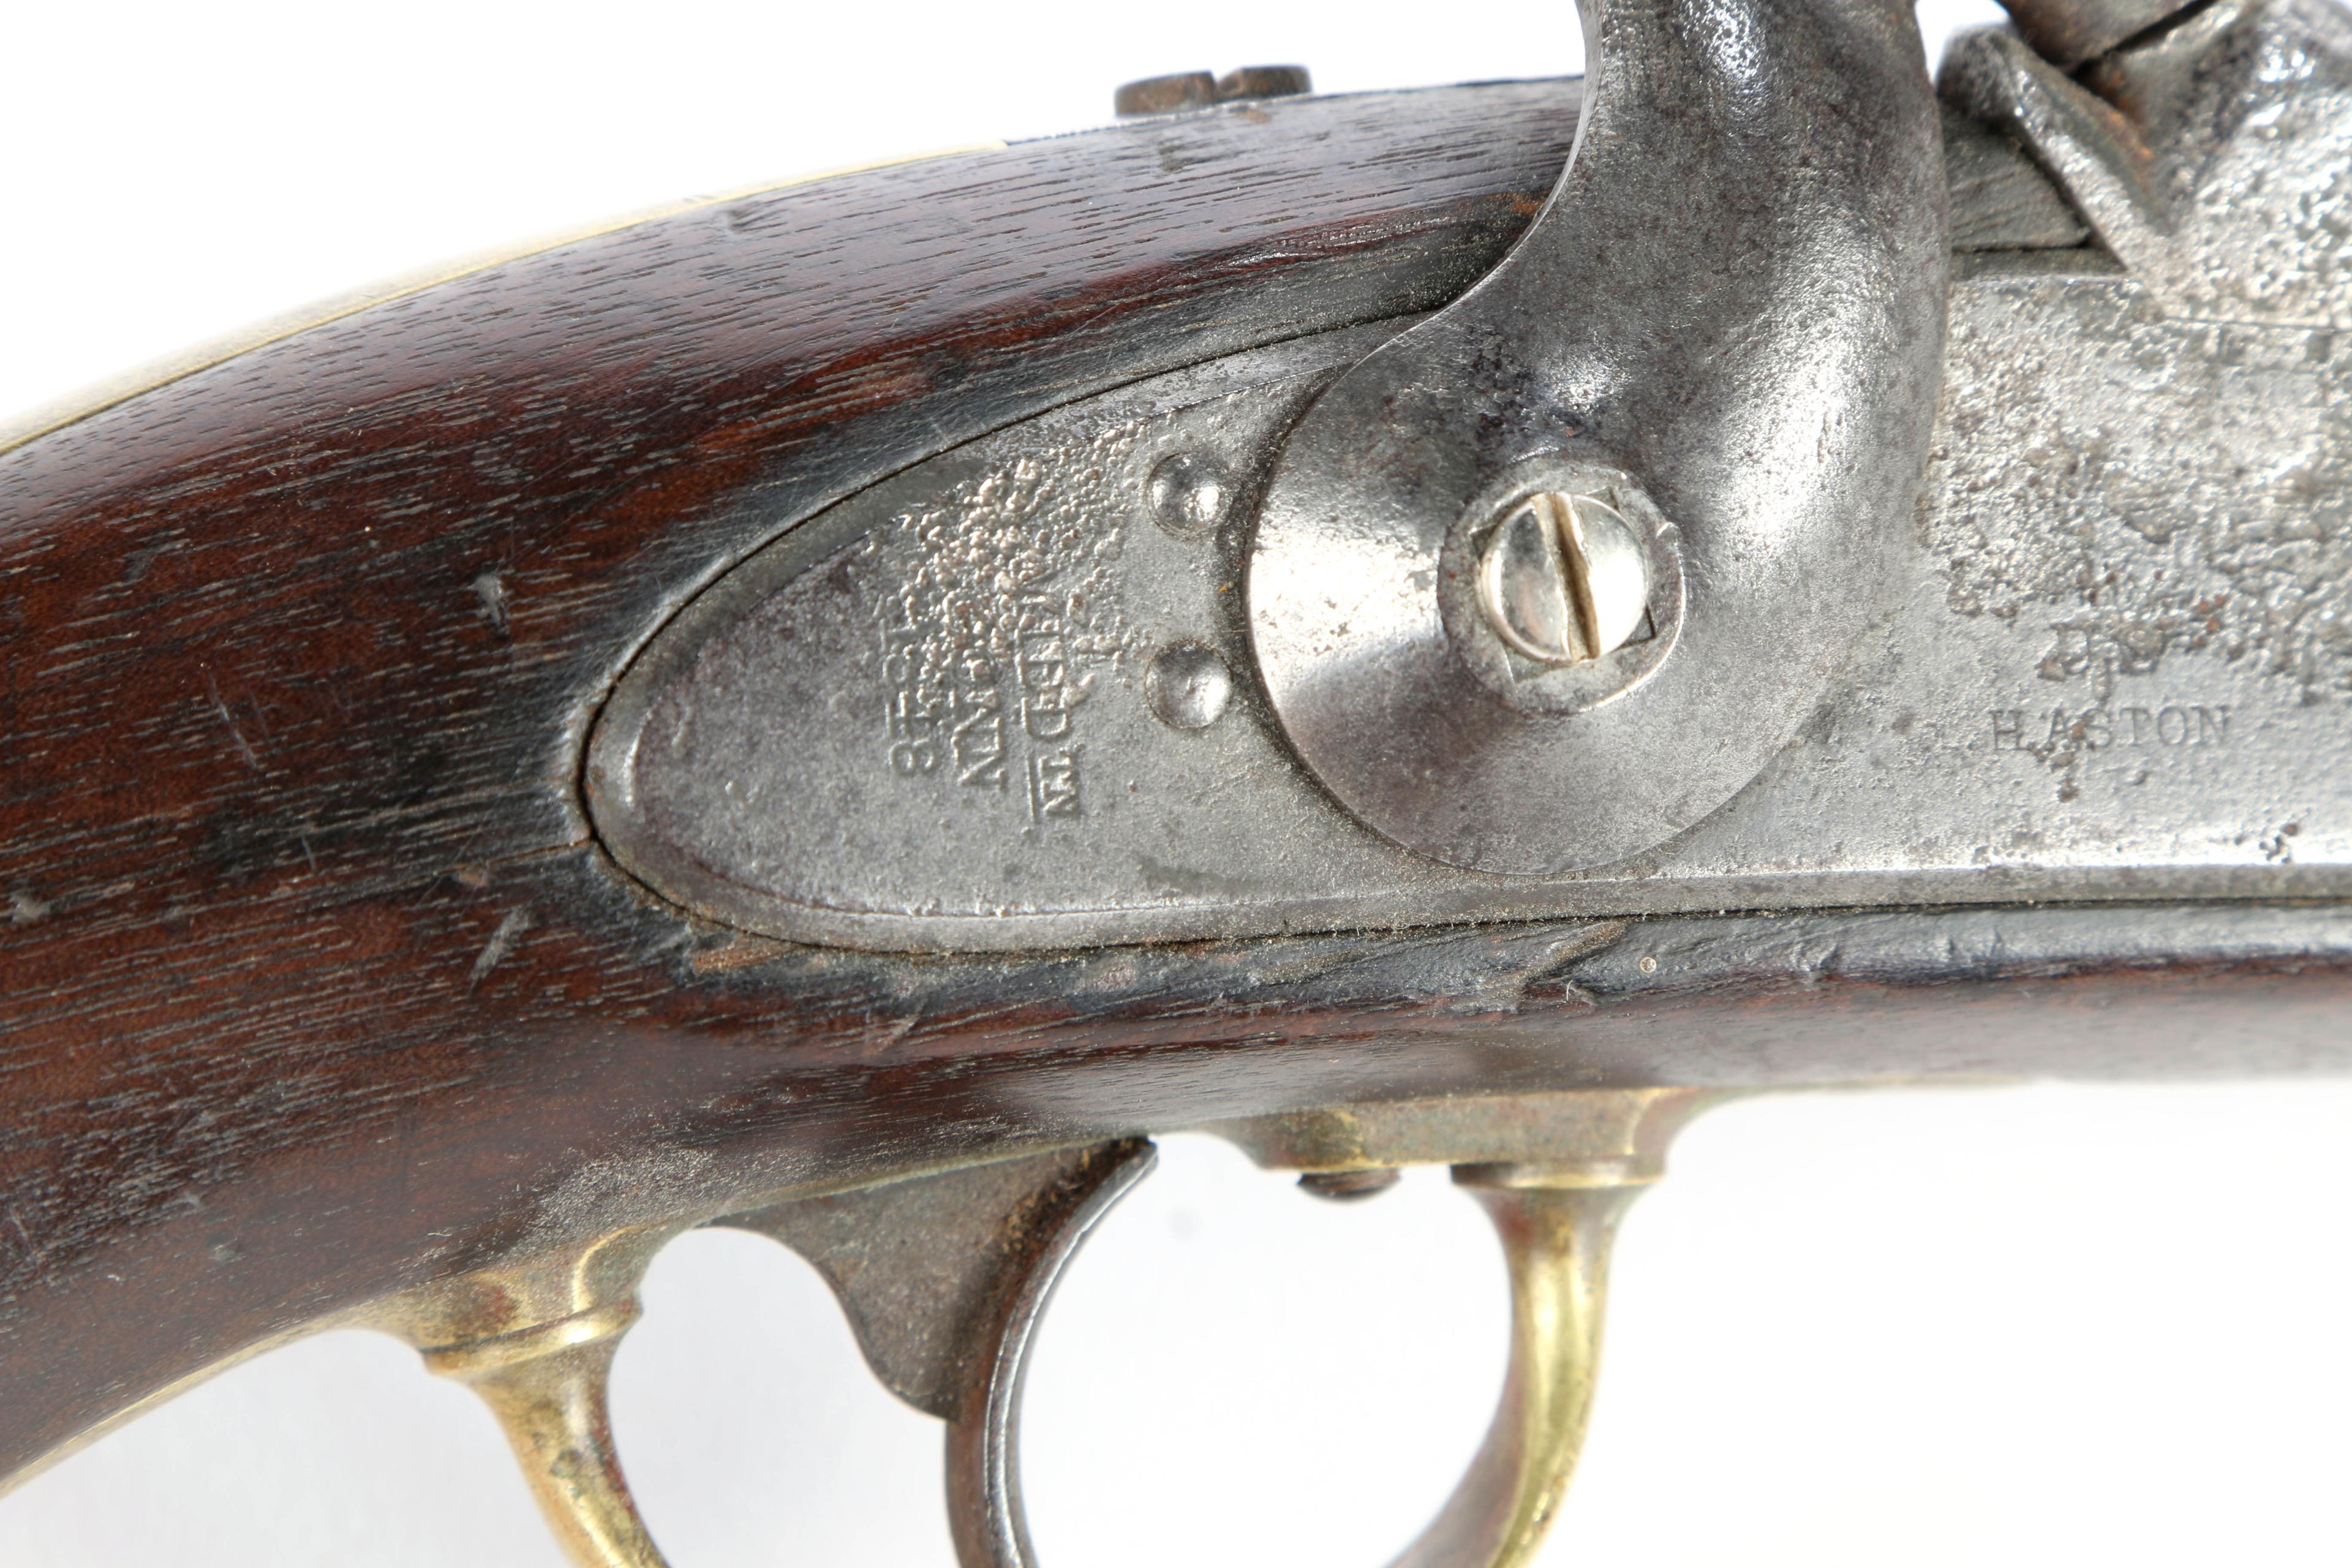 H. Aston Horse Pistol in .62 Caliber